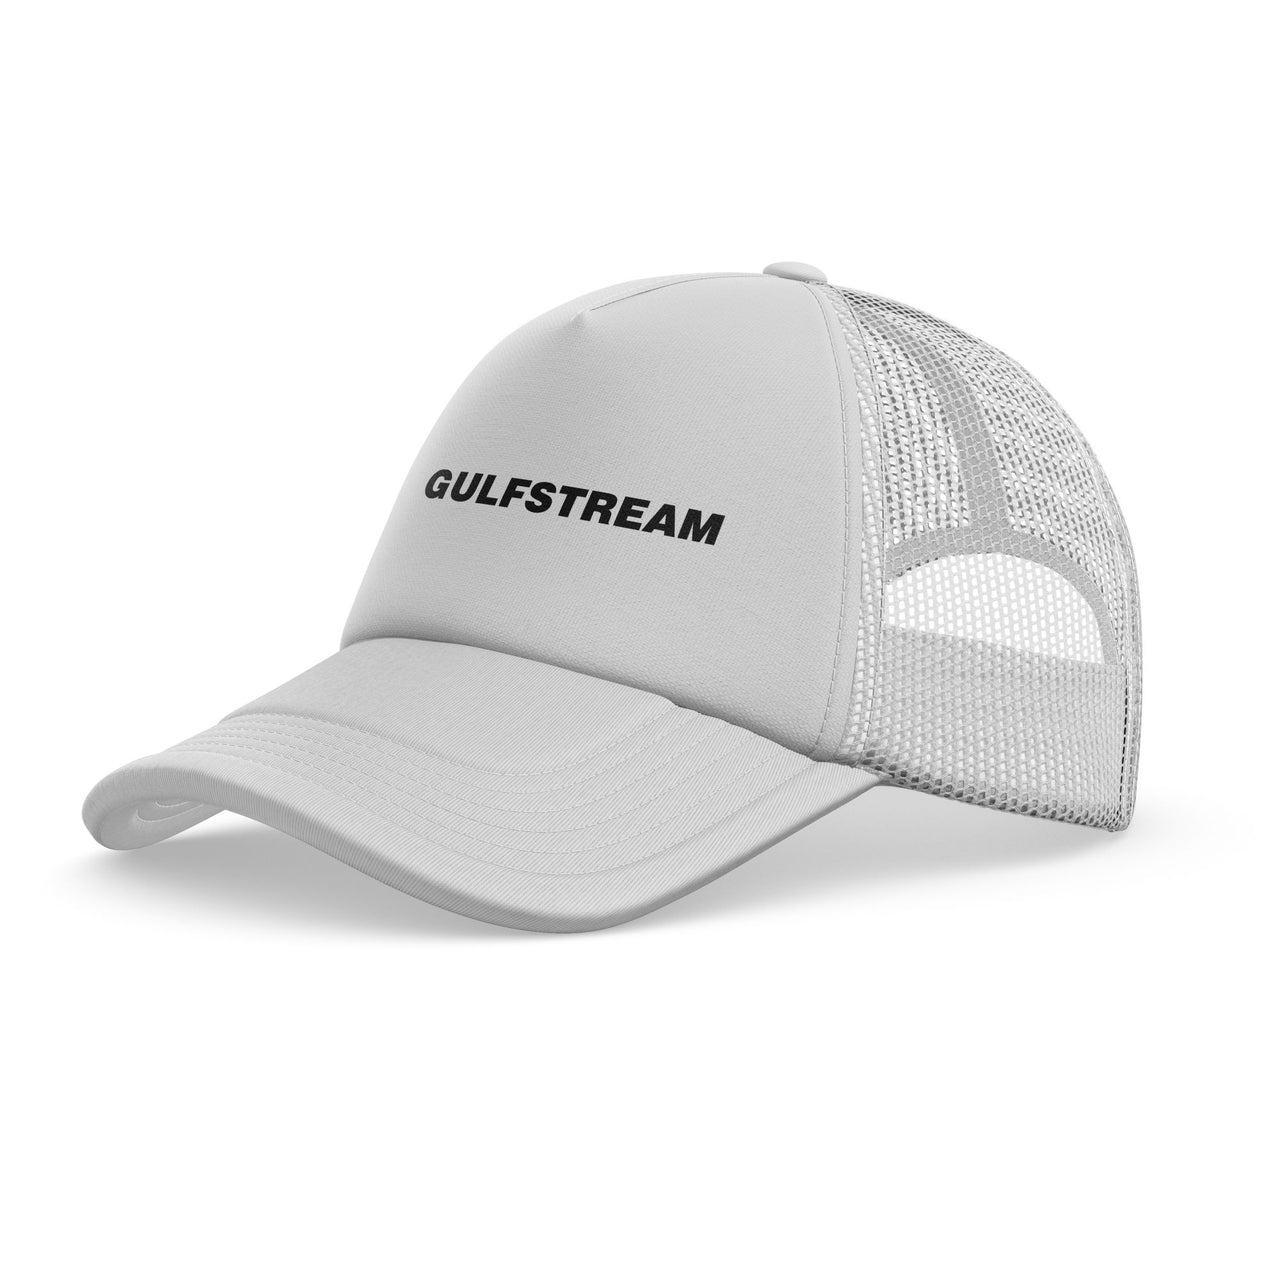 Gulfstream & Text Designed Trucker Caps & Hats